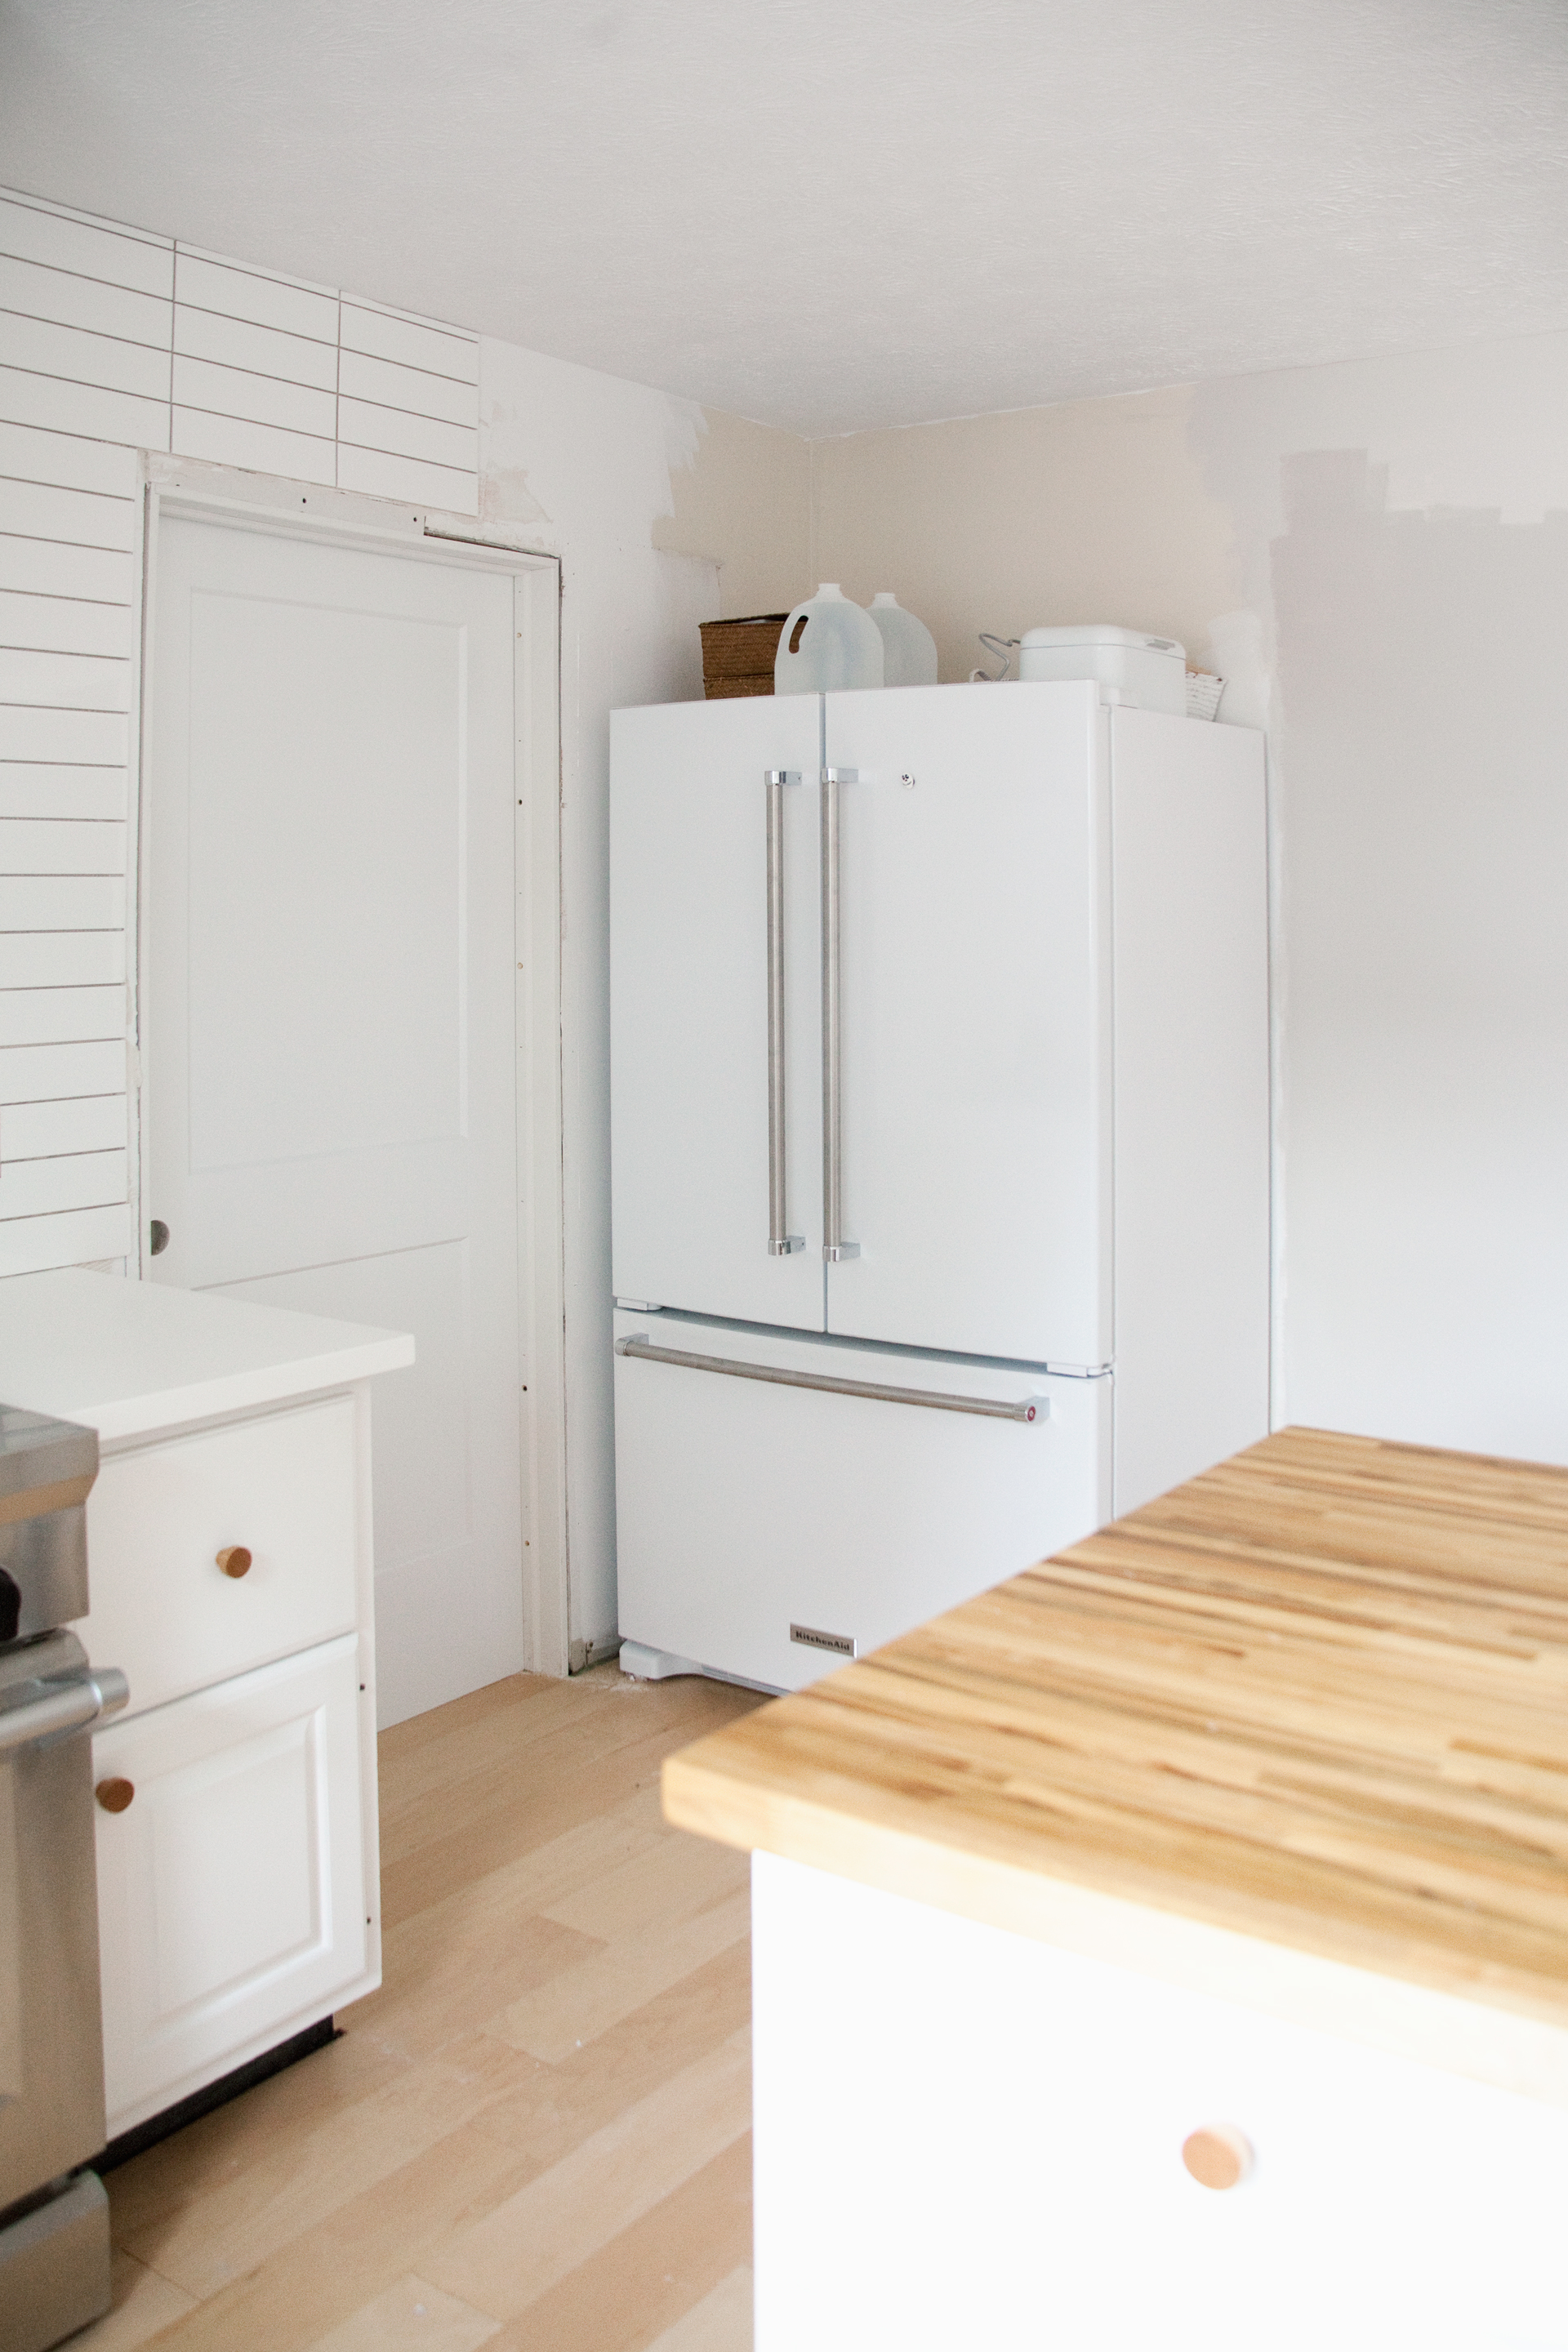 kitchenaid counter depth refrigerator